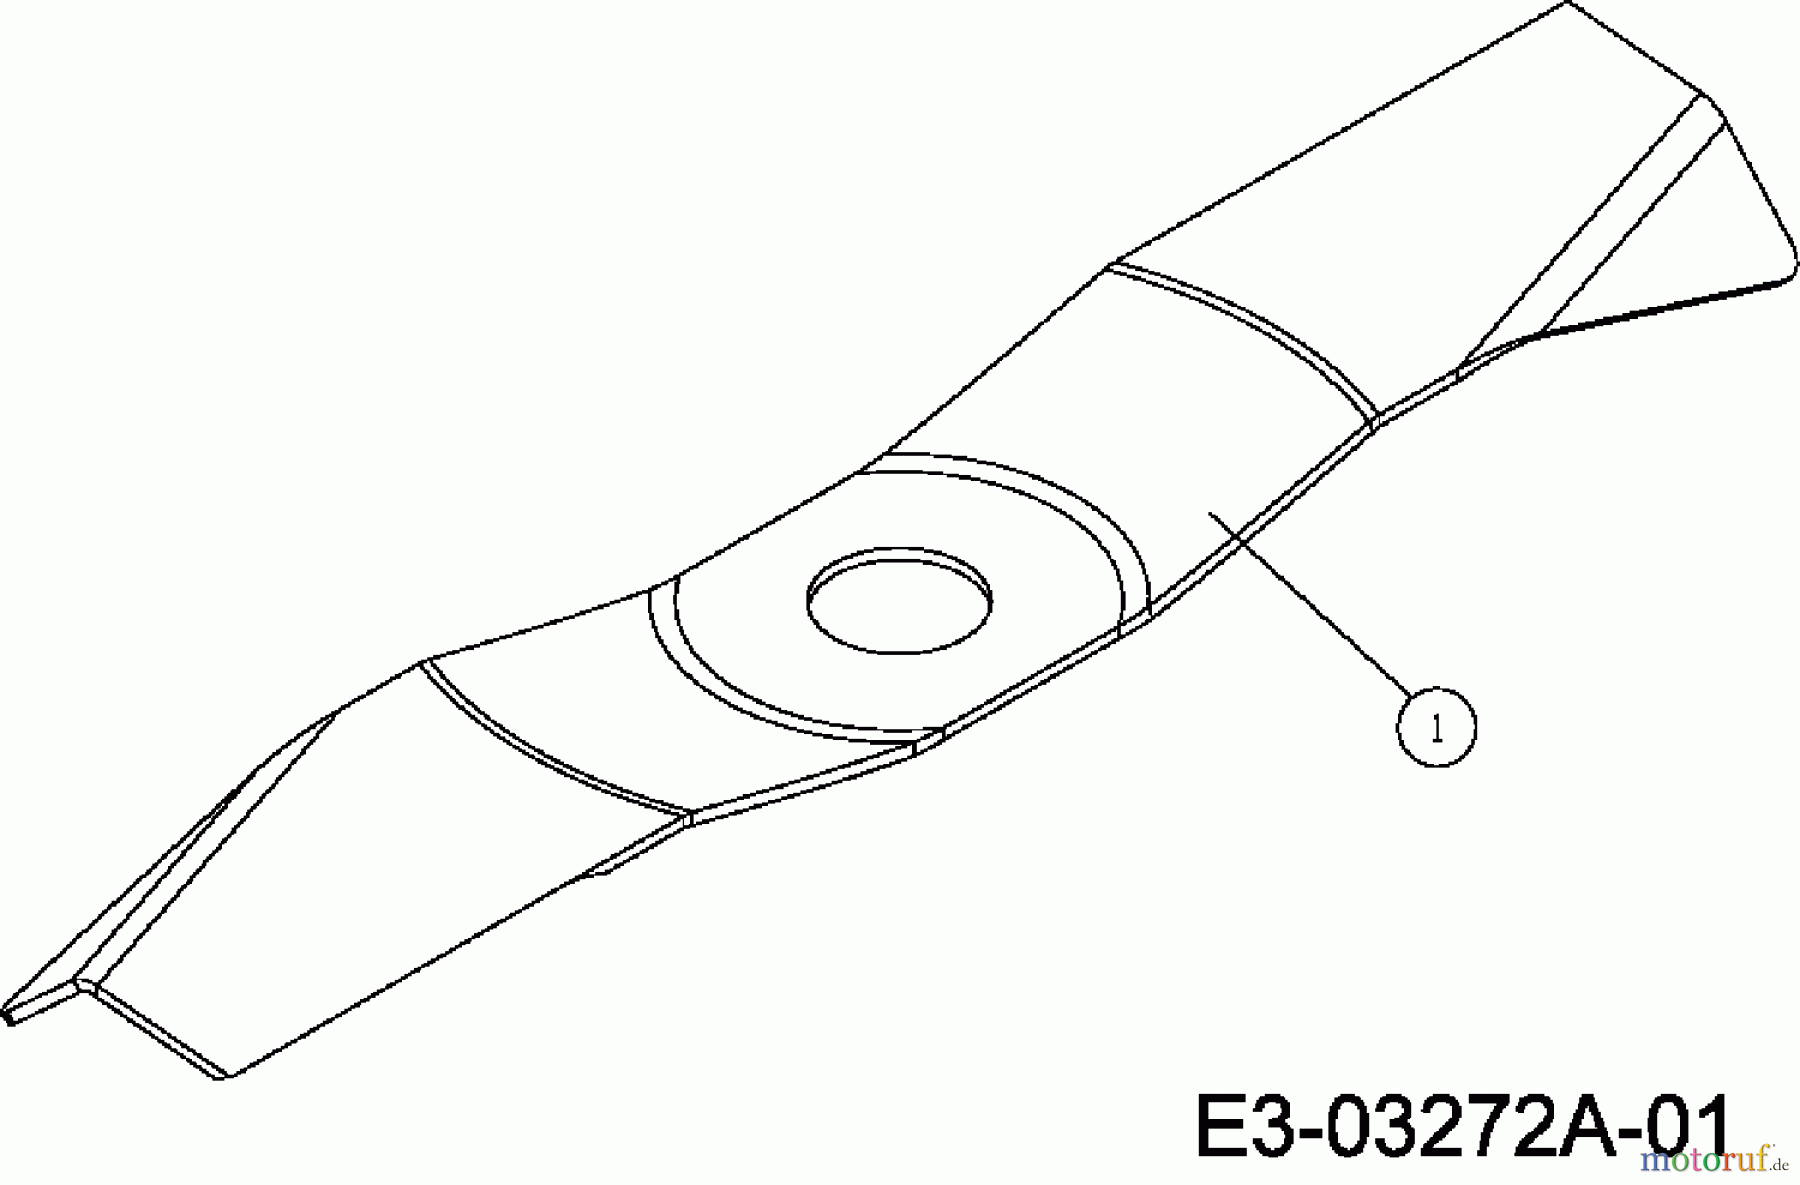  Terradena Elektromäher EM 1400 18C-N4S-651  (2009) Messer